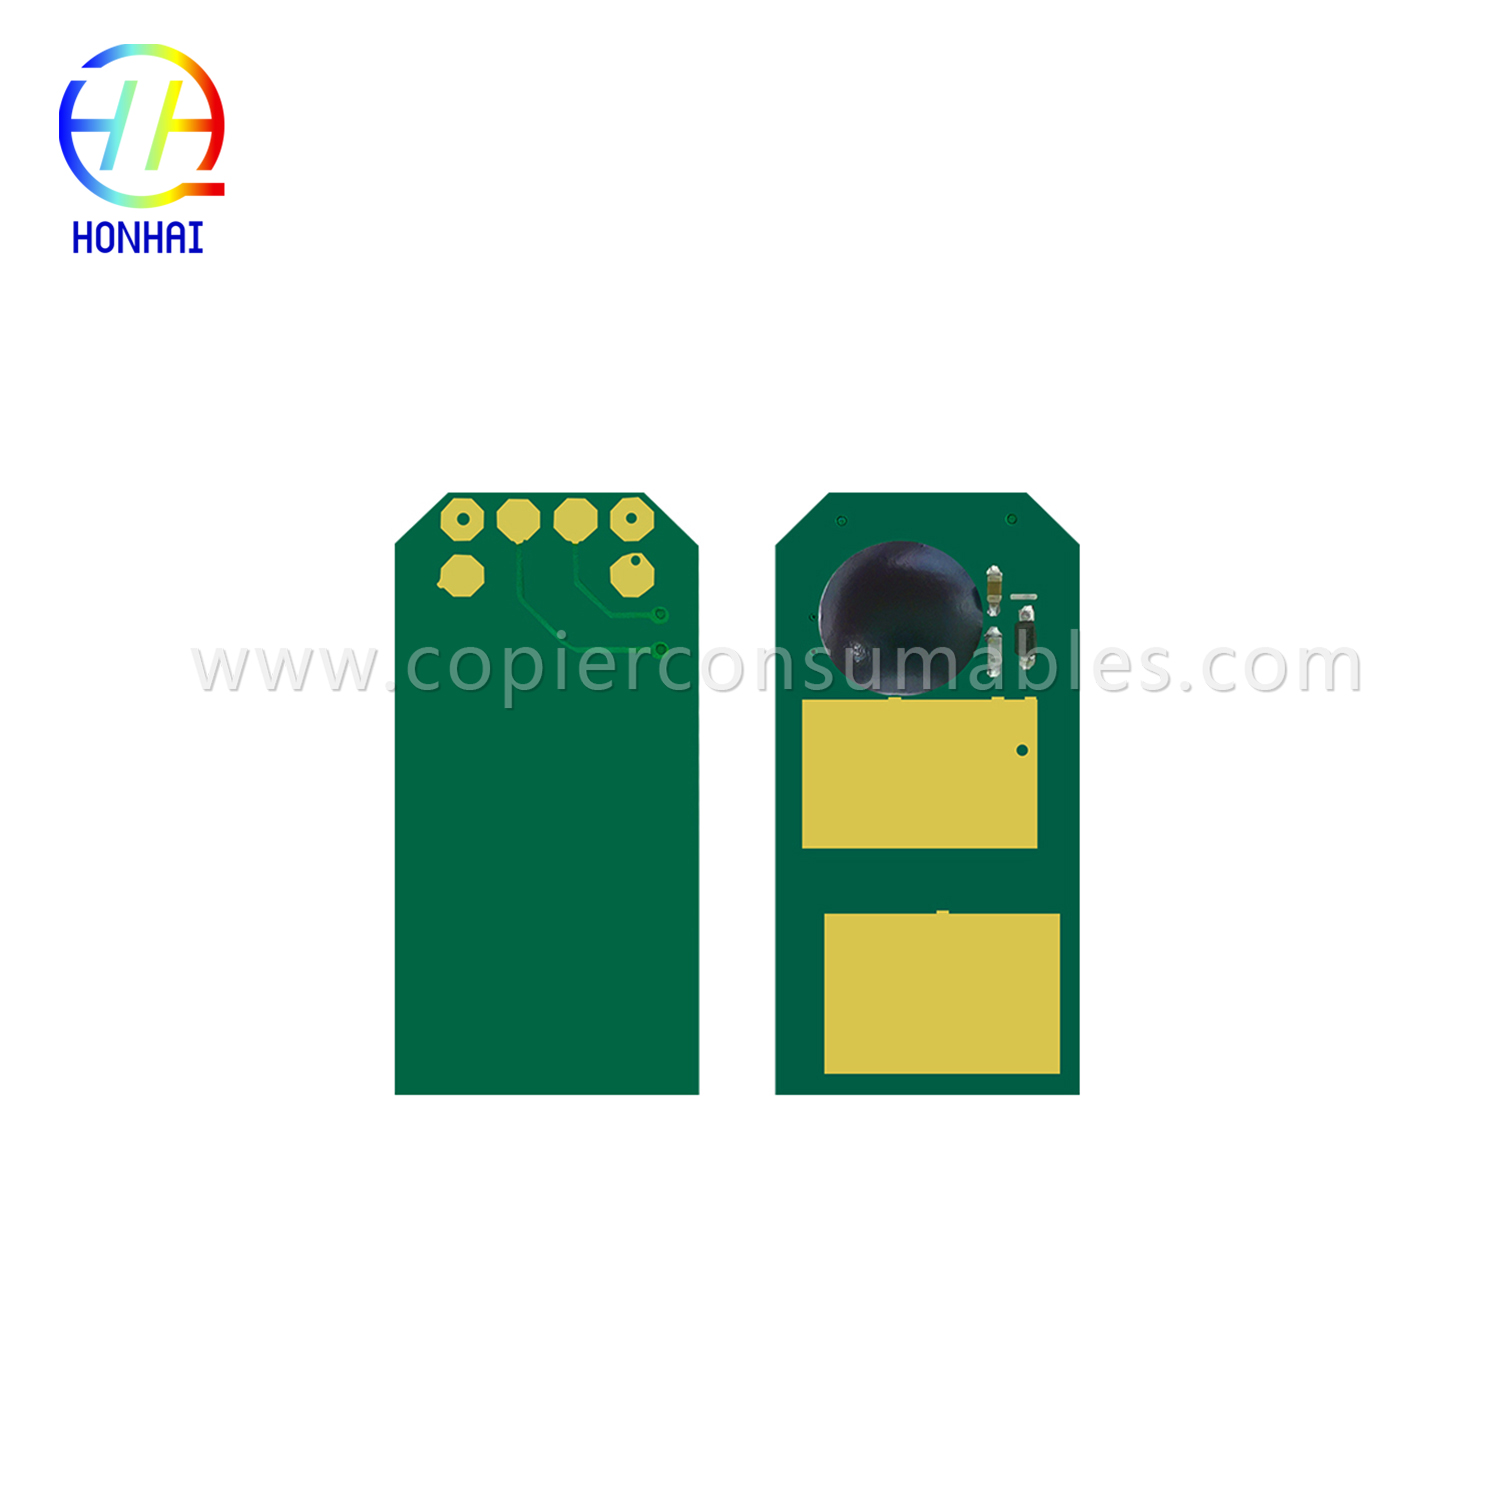 Toner Cartridge Chip for OKI B401 MB441 MB451